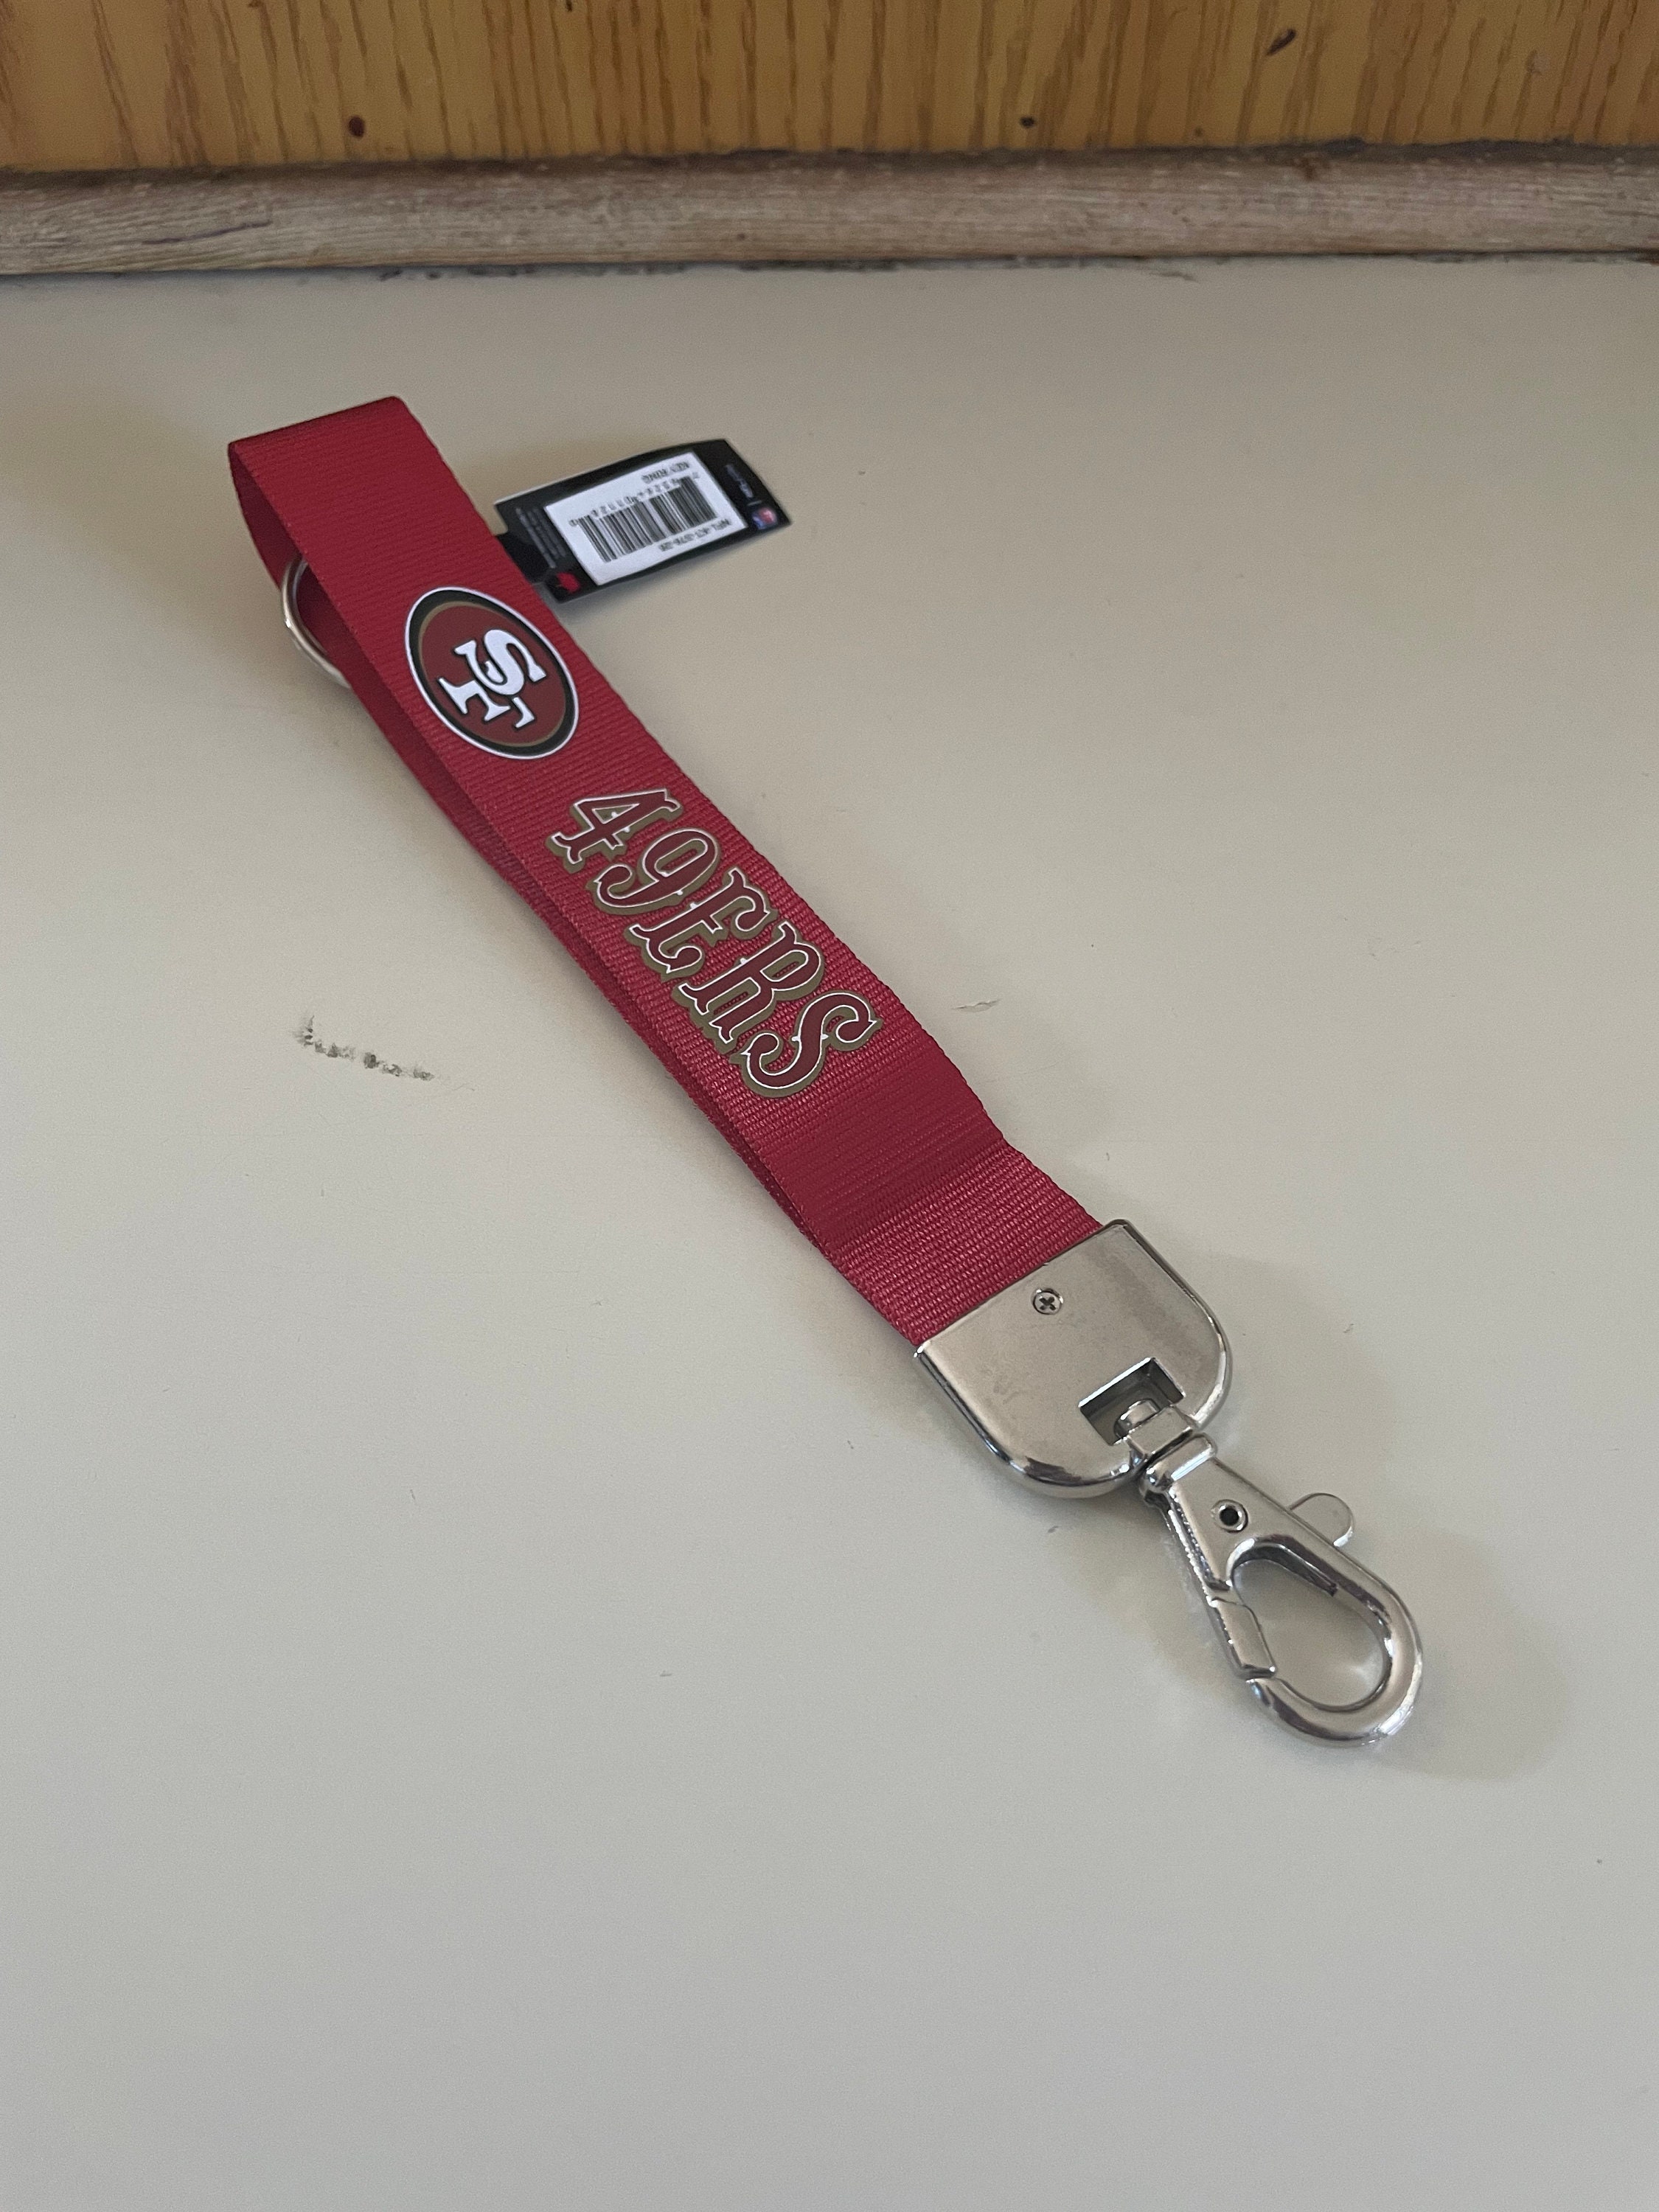 San Francisco 49ers Chrome Logo Cut Keychain - Sports Fan Shop